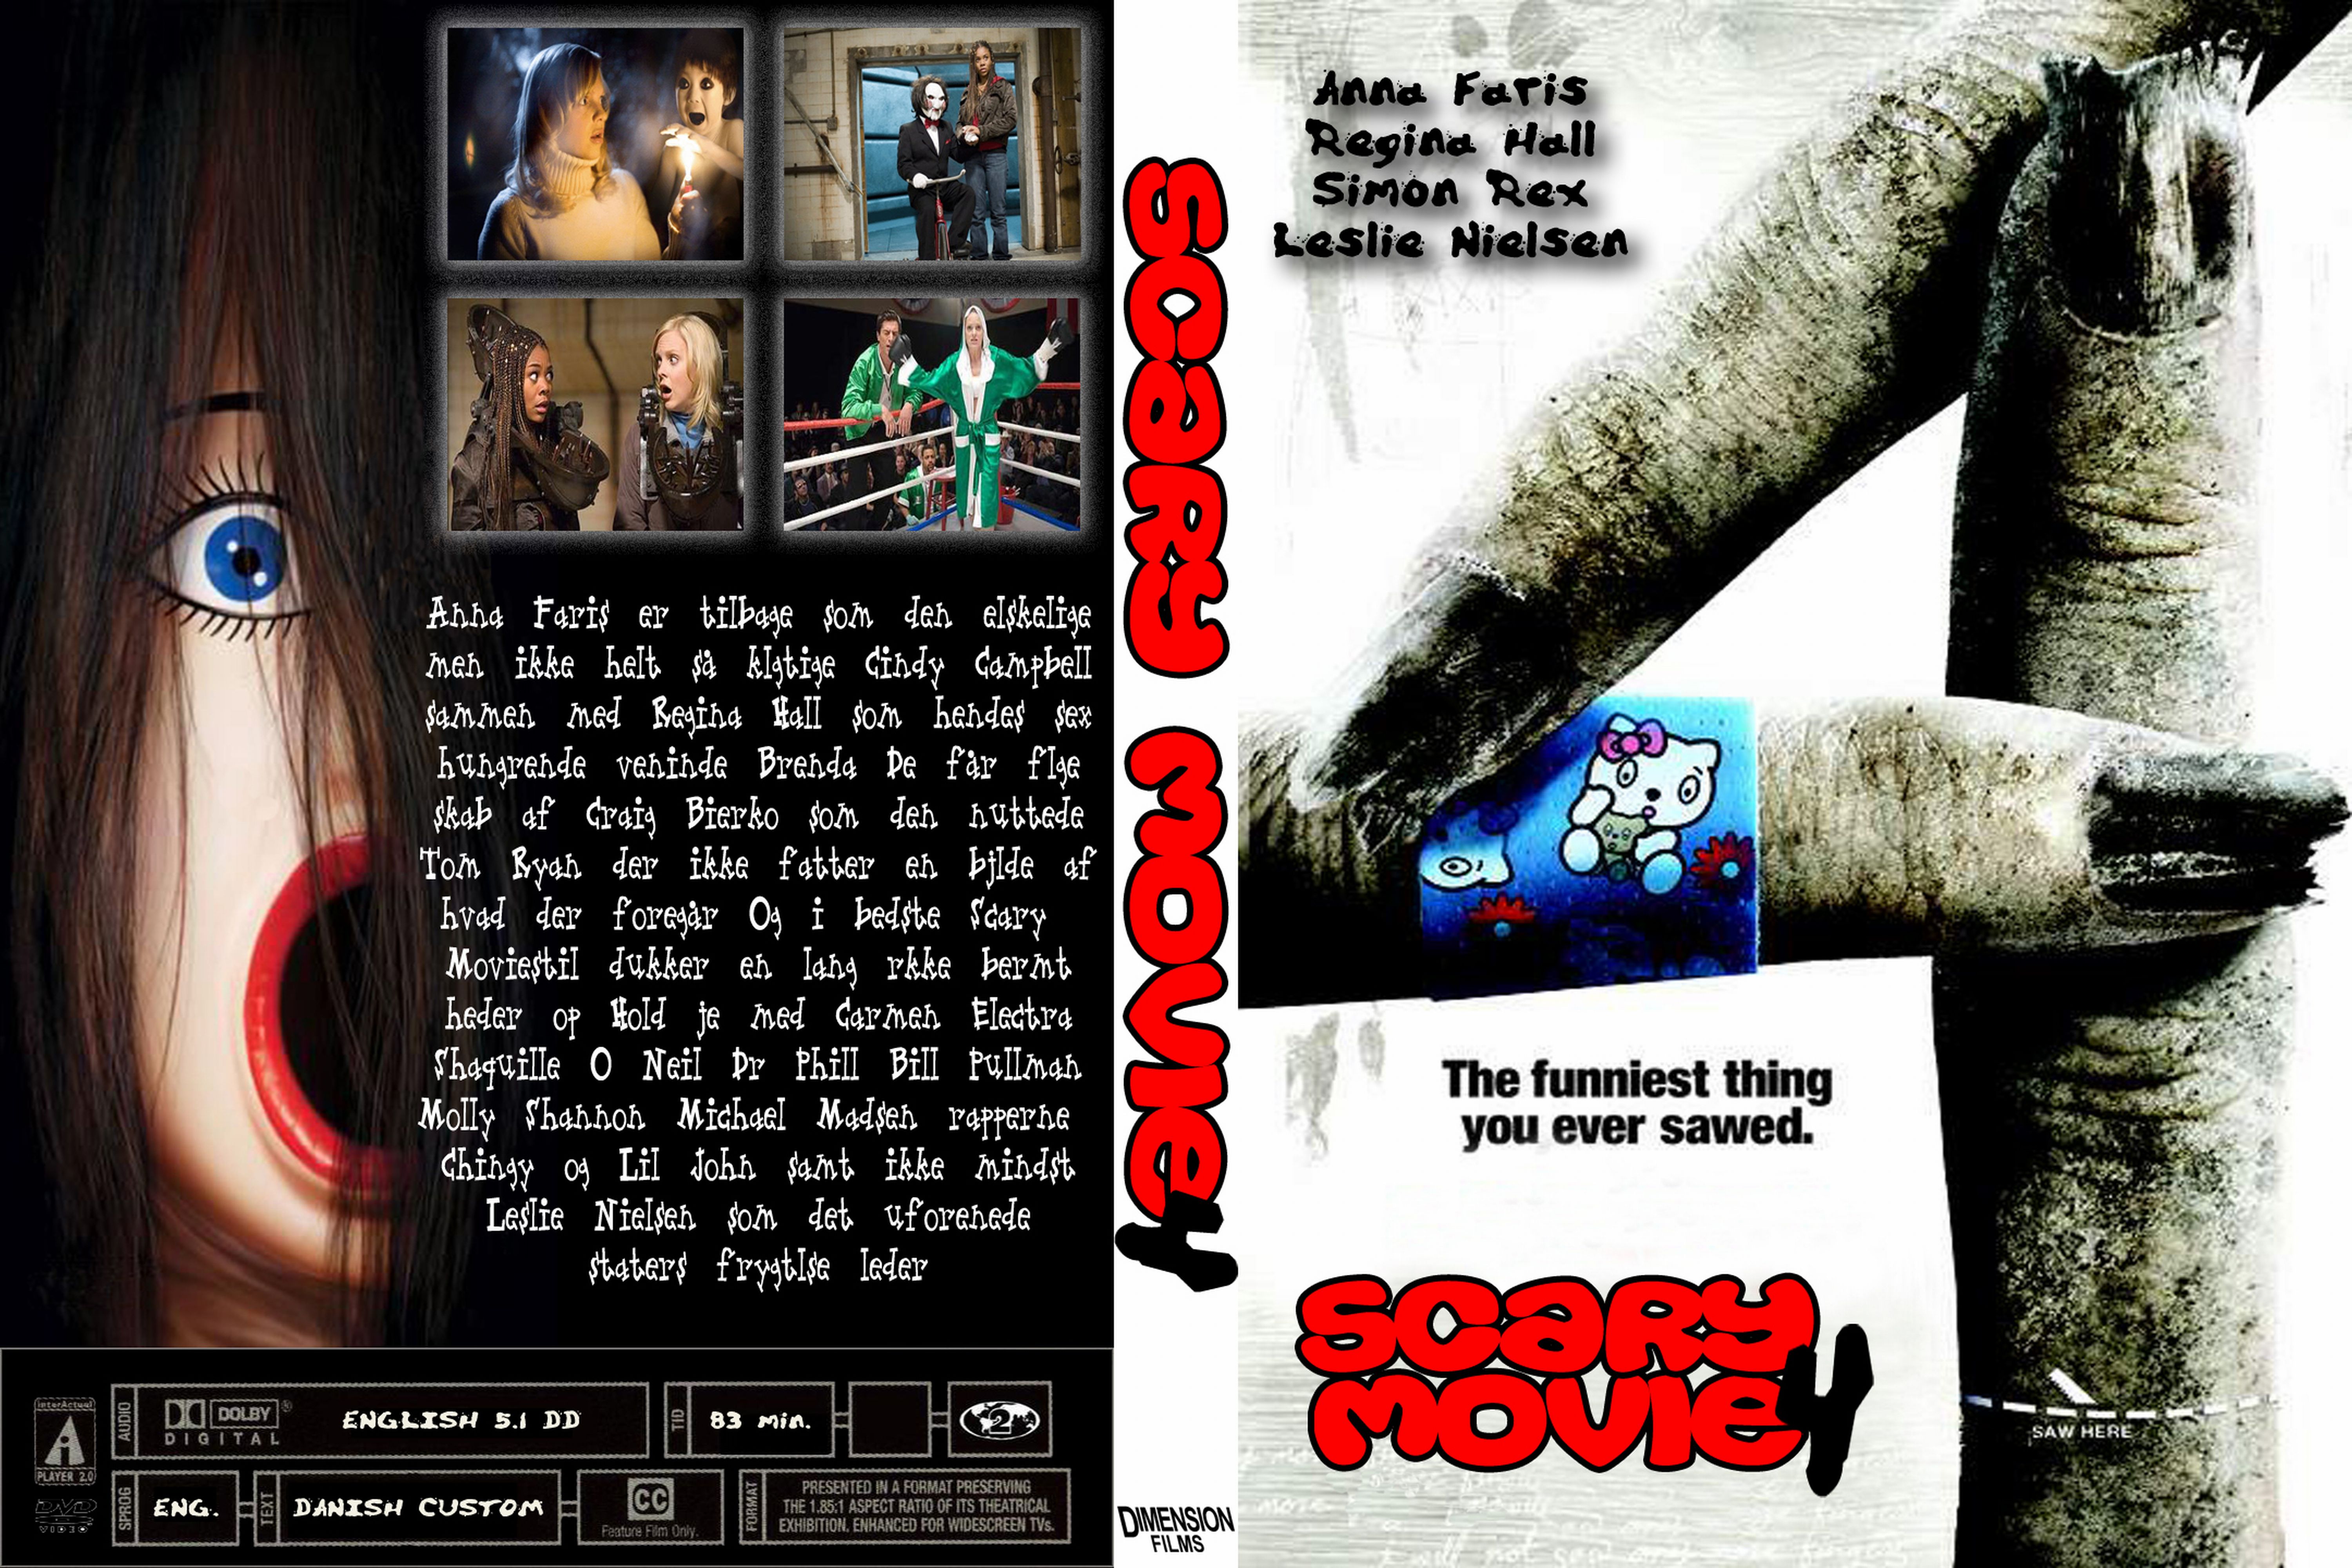 Covers Box Sk Scary Movie 4 High Quality Dvd Blueray Movie Hdmoviearea, 480p movies, dual audio movies, hollywood & bollywood movies. covers box sk